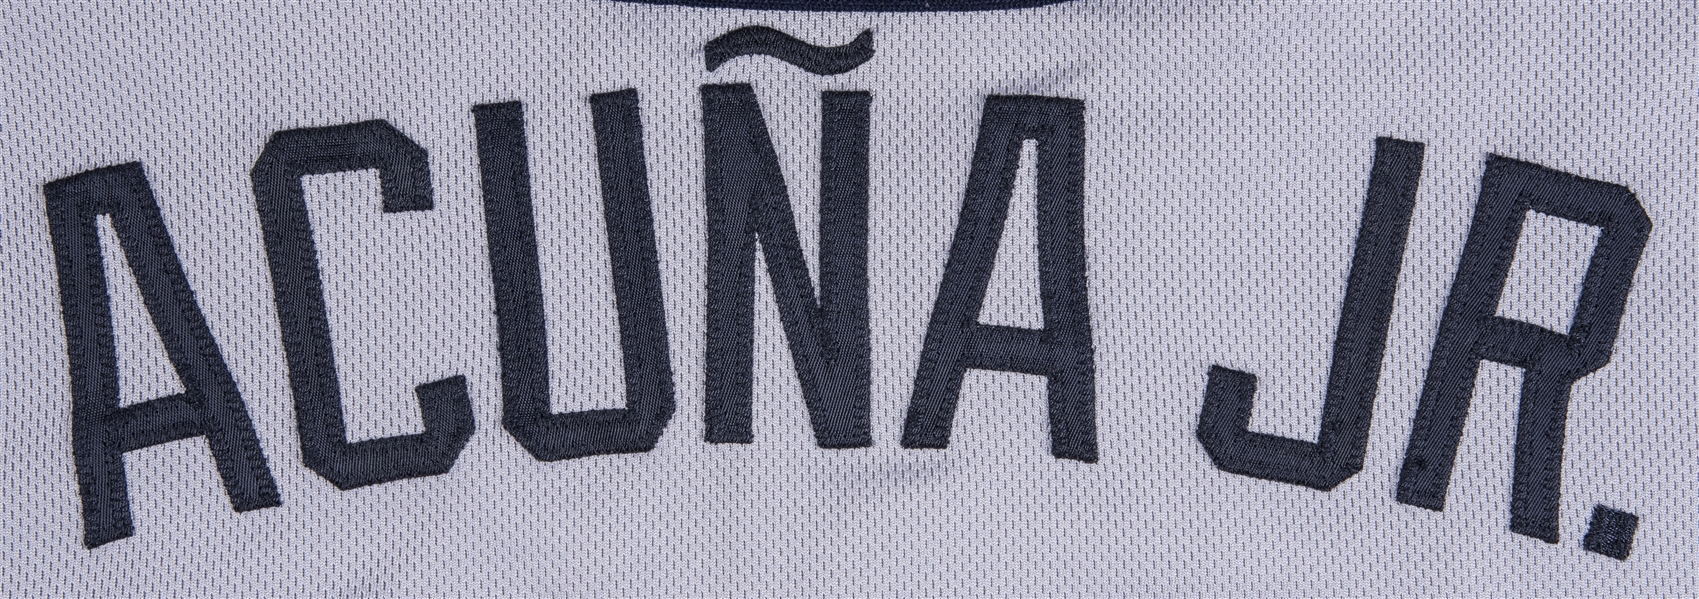 Ronald Acuña Jr.(Team-Issued or Game-Used) 2019 Atlanta Braves